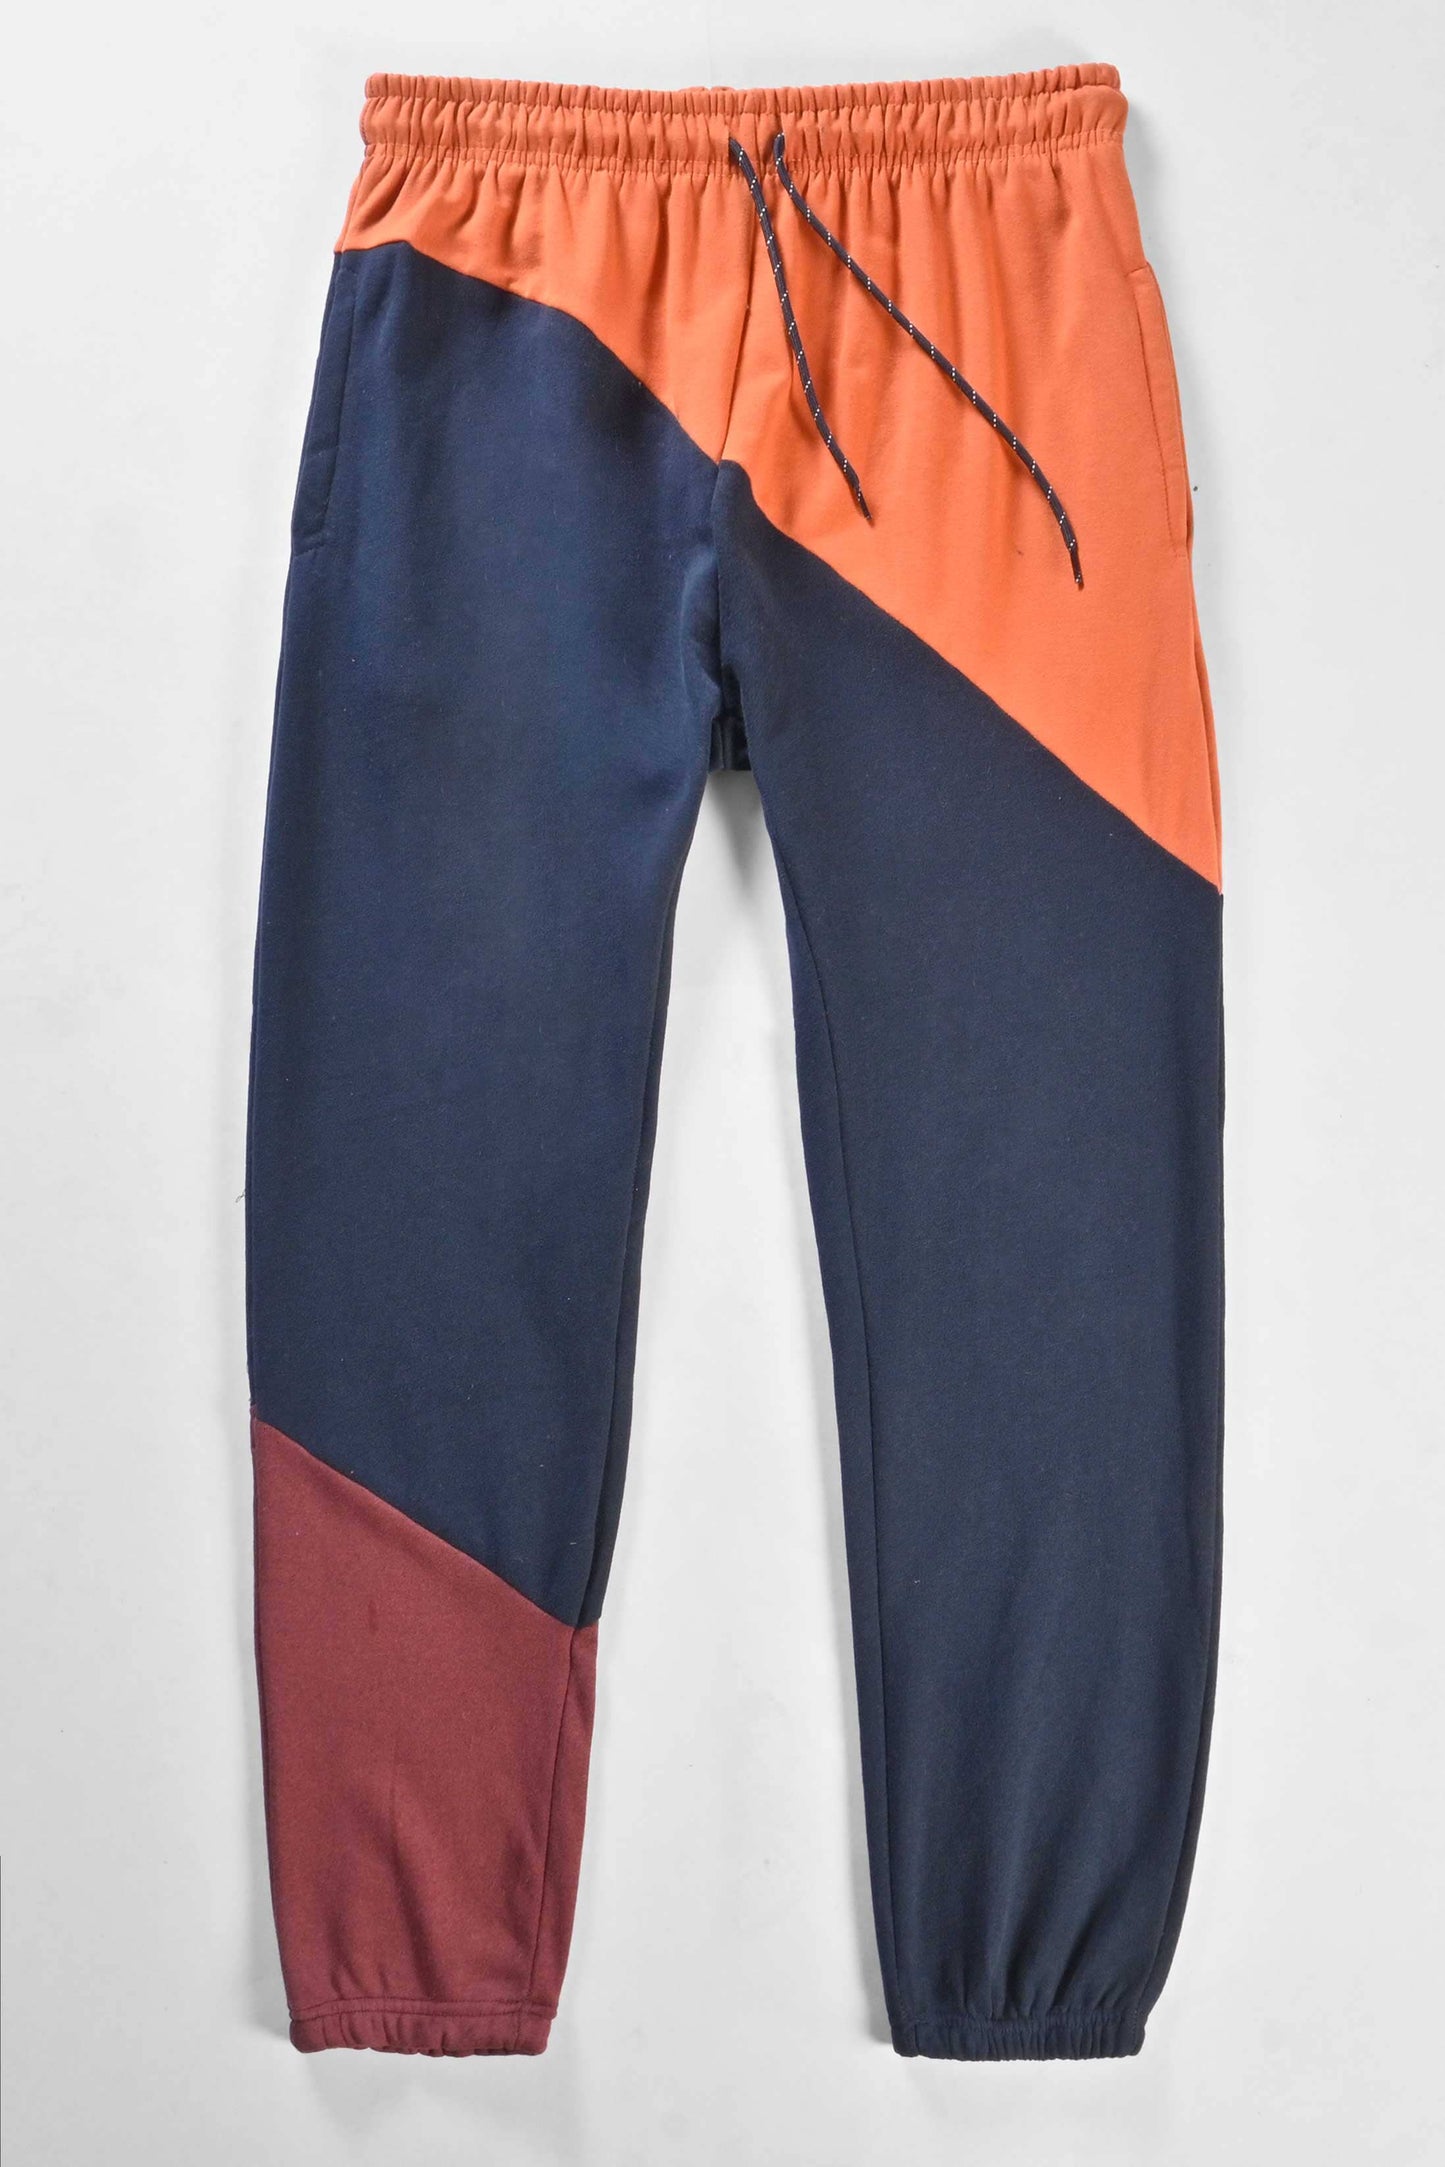 MAX 21 Men's Contrast Design Betim Sweat Pants Men's Trousers SZK 